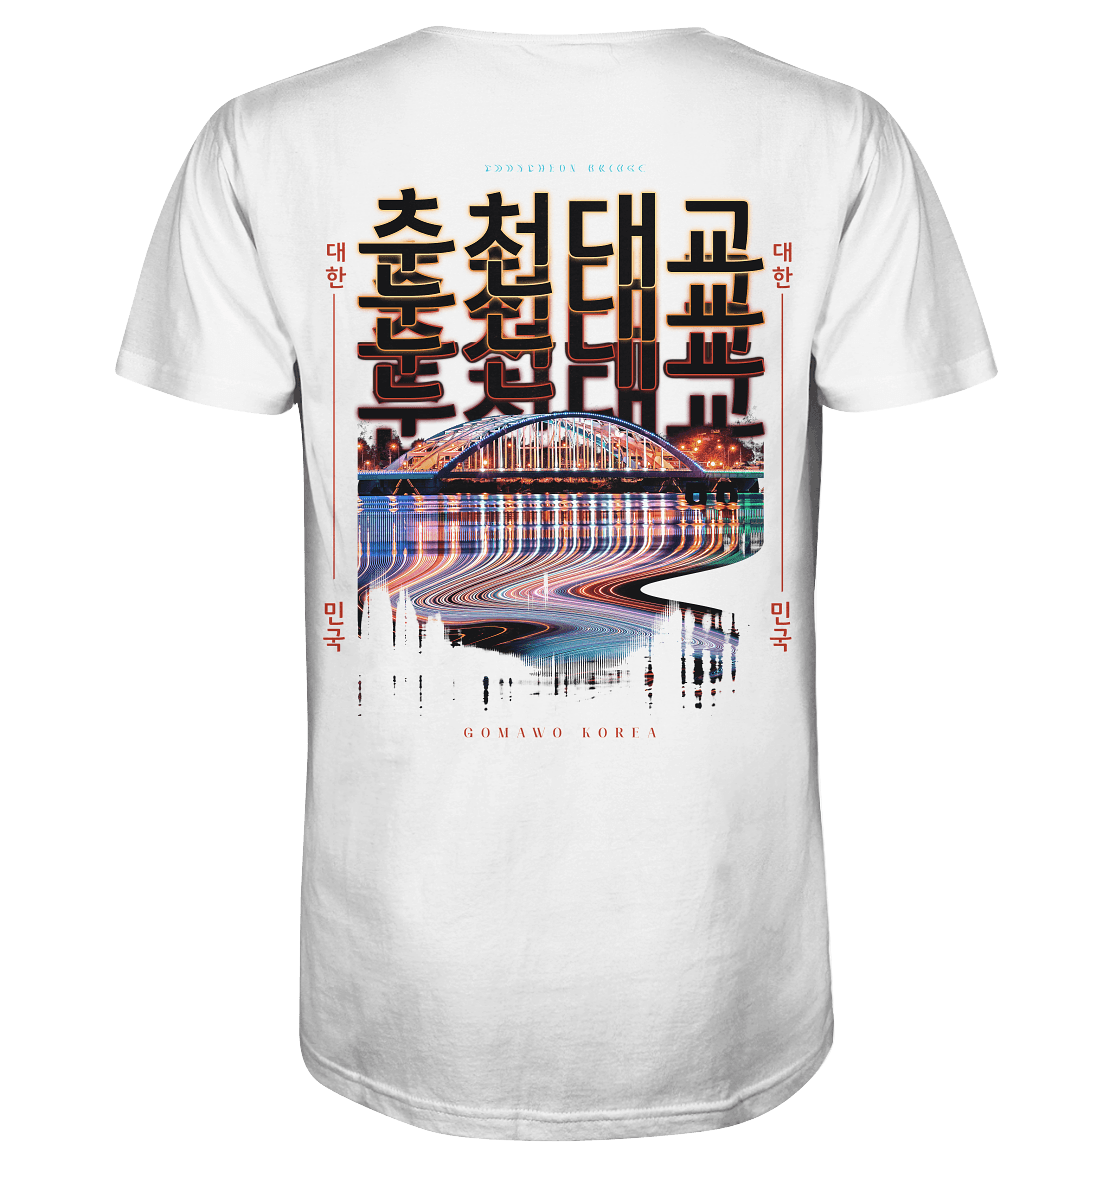 Chuncheon | Herren Organic Shirt Backprint - Gomawo Korea - Herren - Südkorea - Korea - Bekleidung - Clothing - K-Streetwear - K-Clothing - K-Vibes